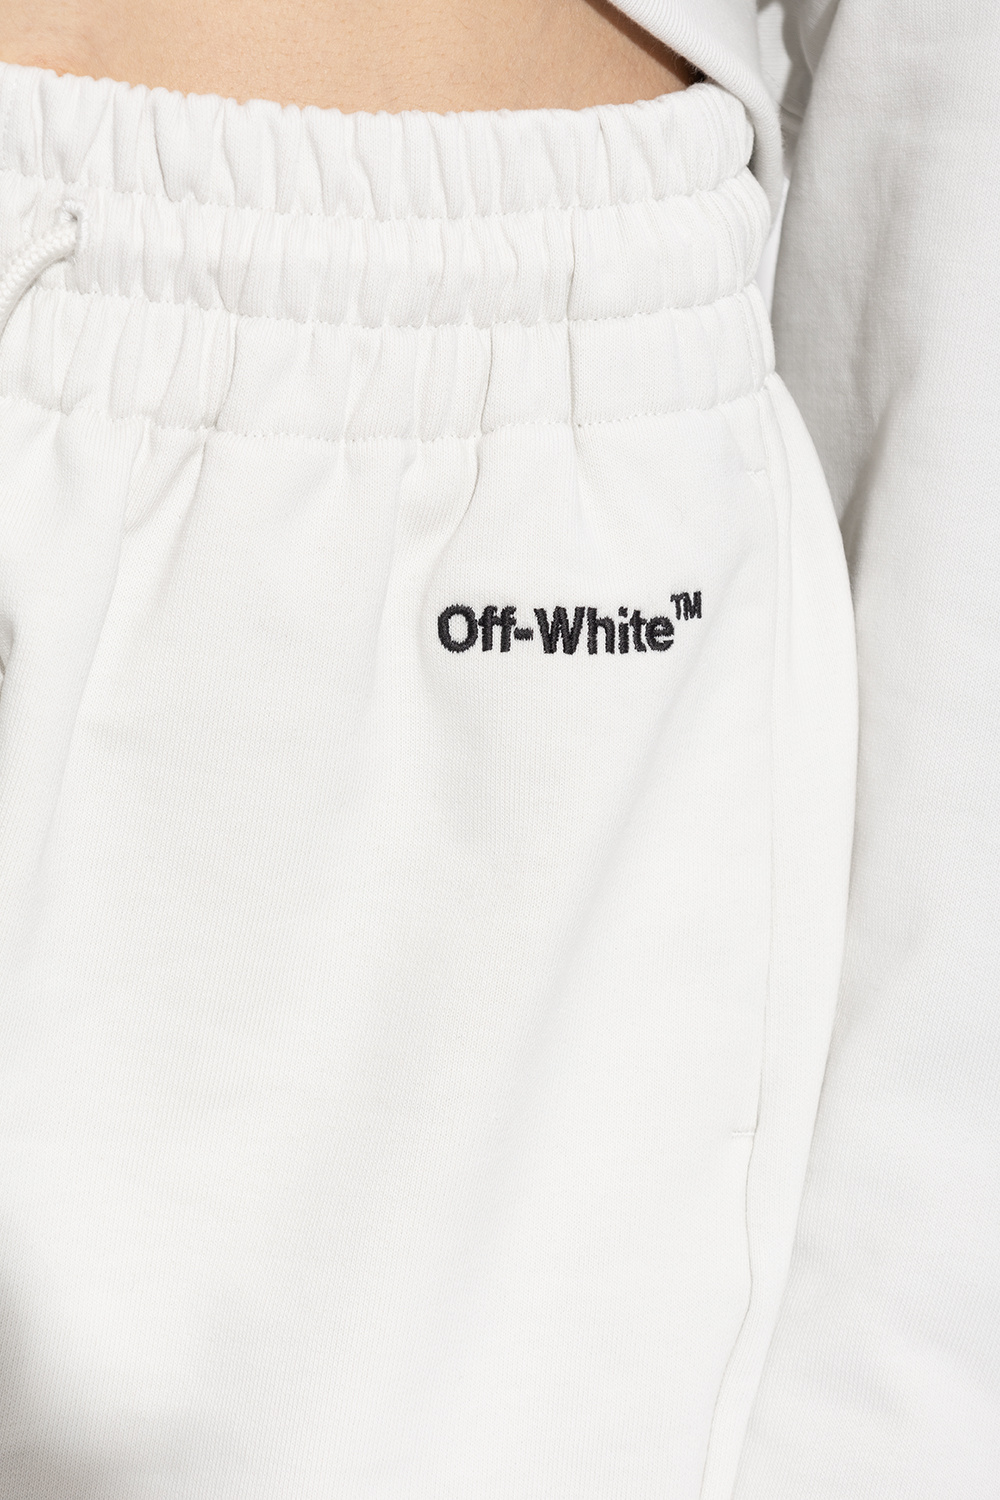 Off-White best yoga shorts